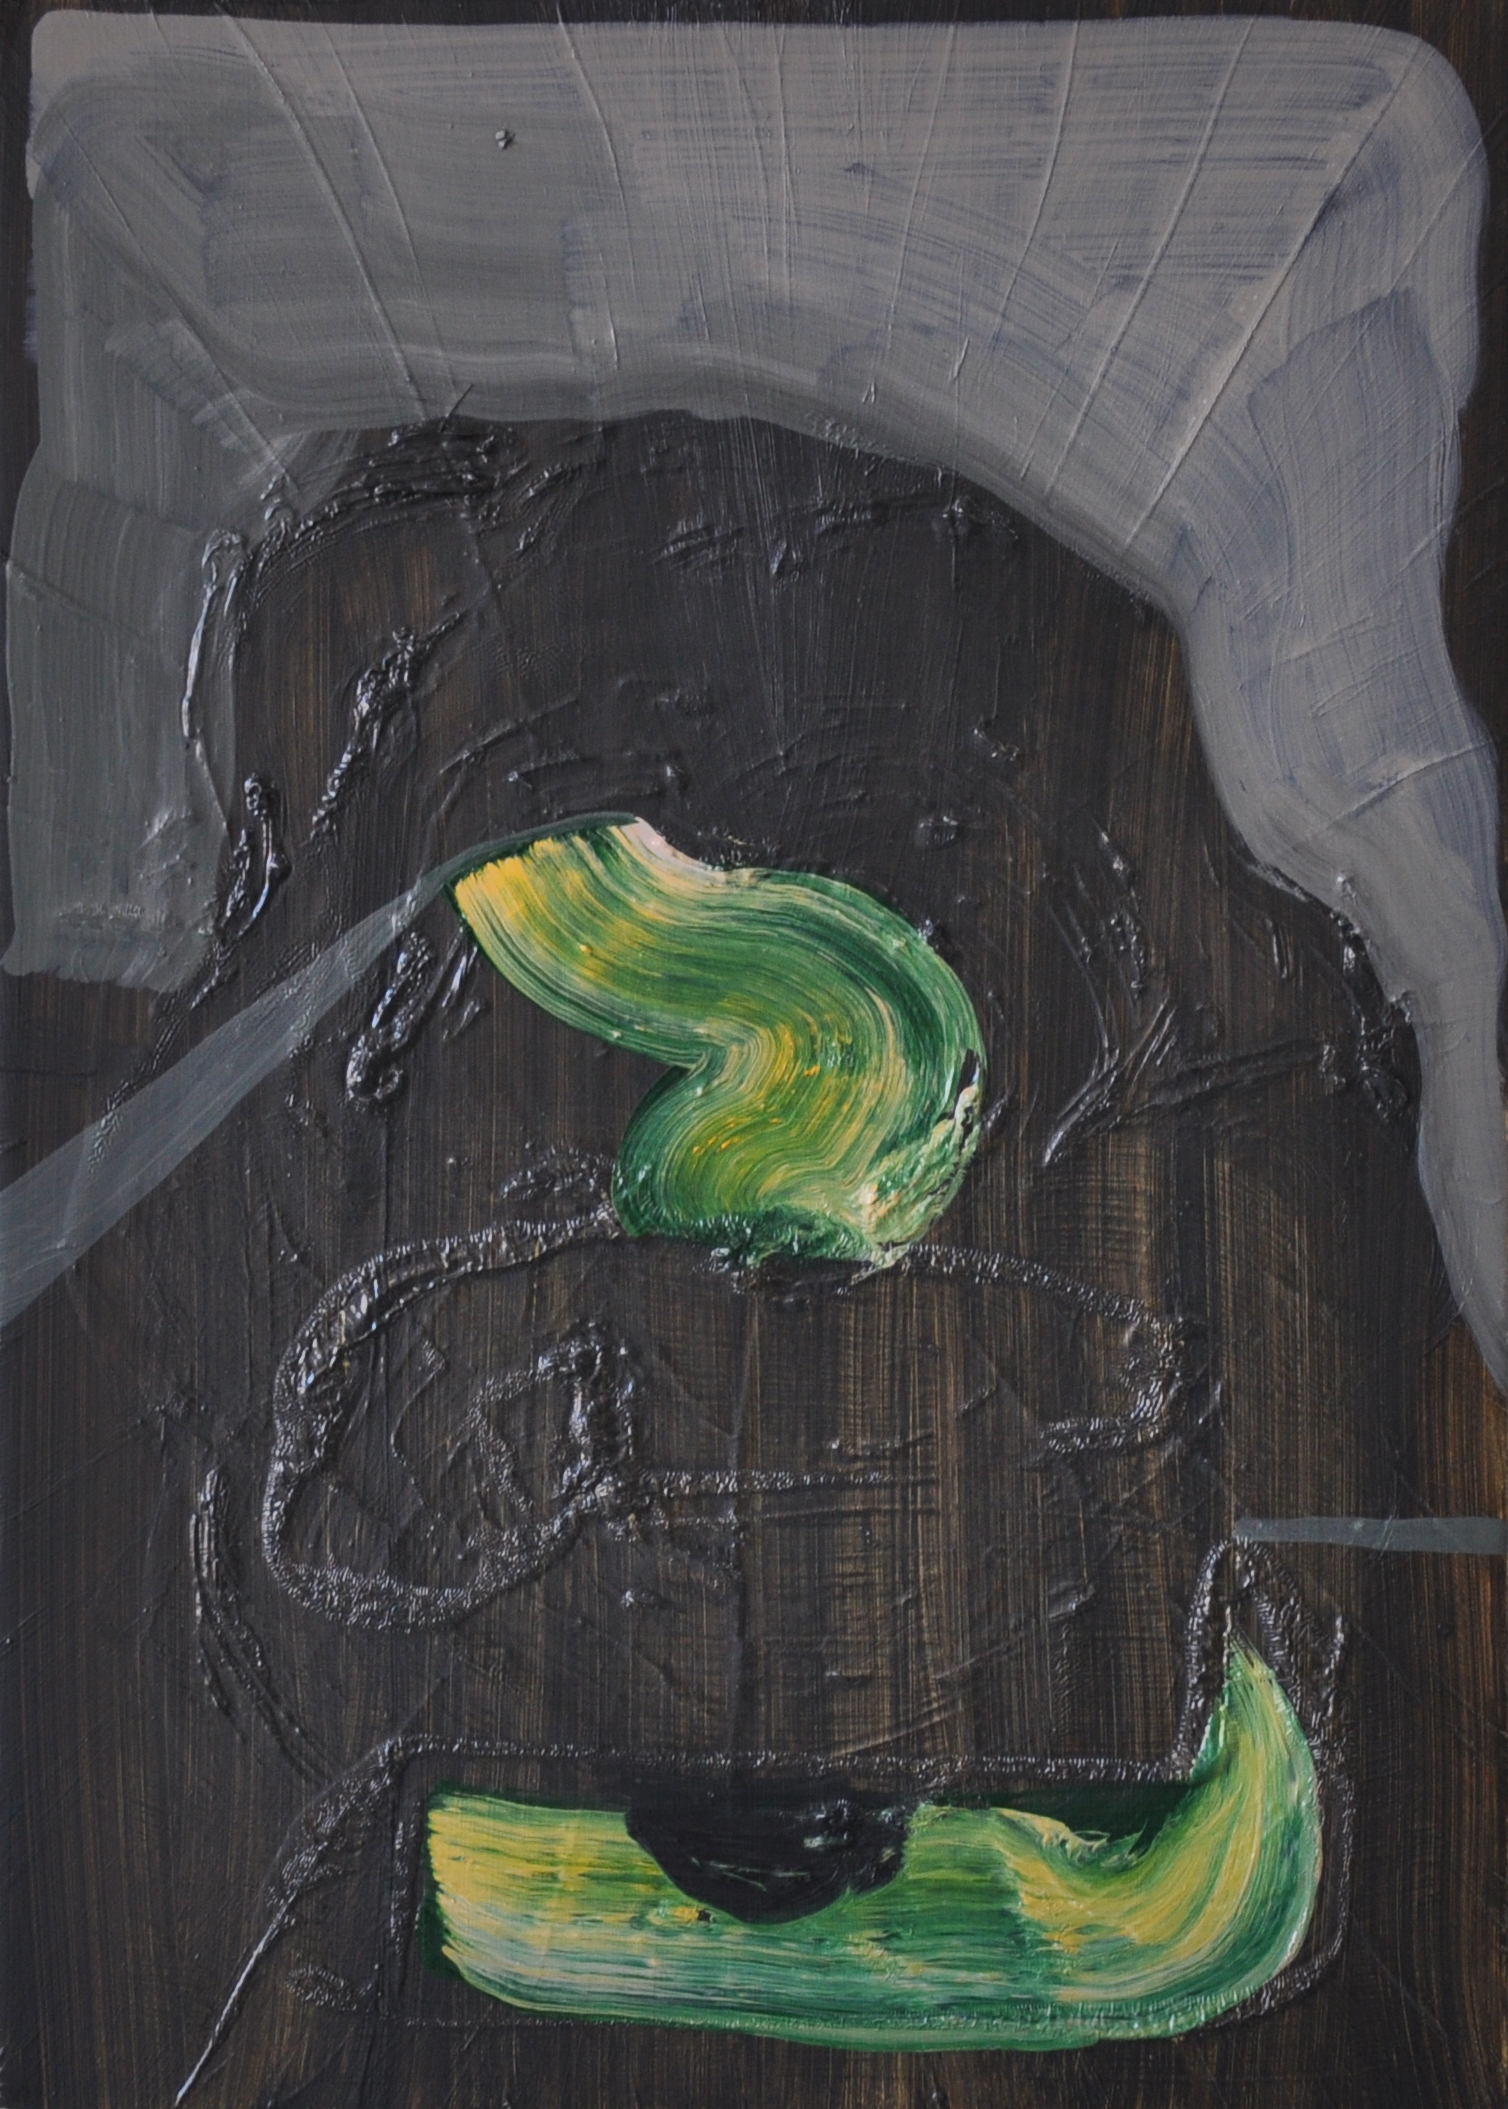 Black Smoker, 2011, Oil on cotton, 35 x 25 cm